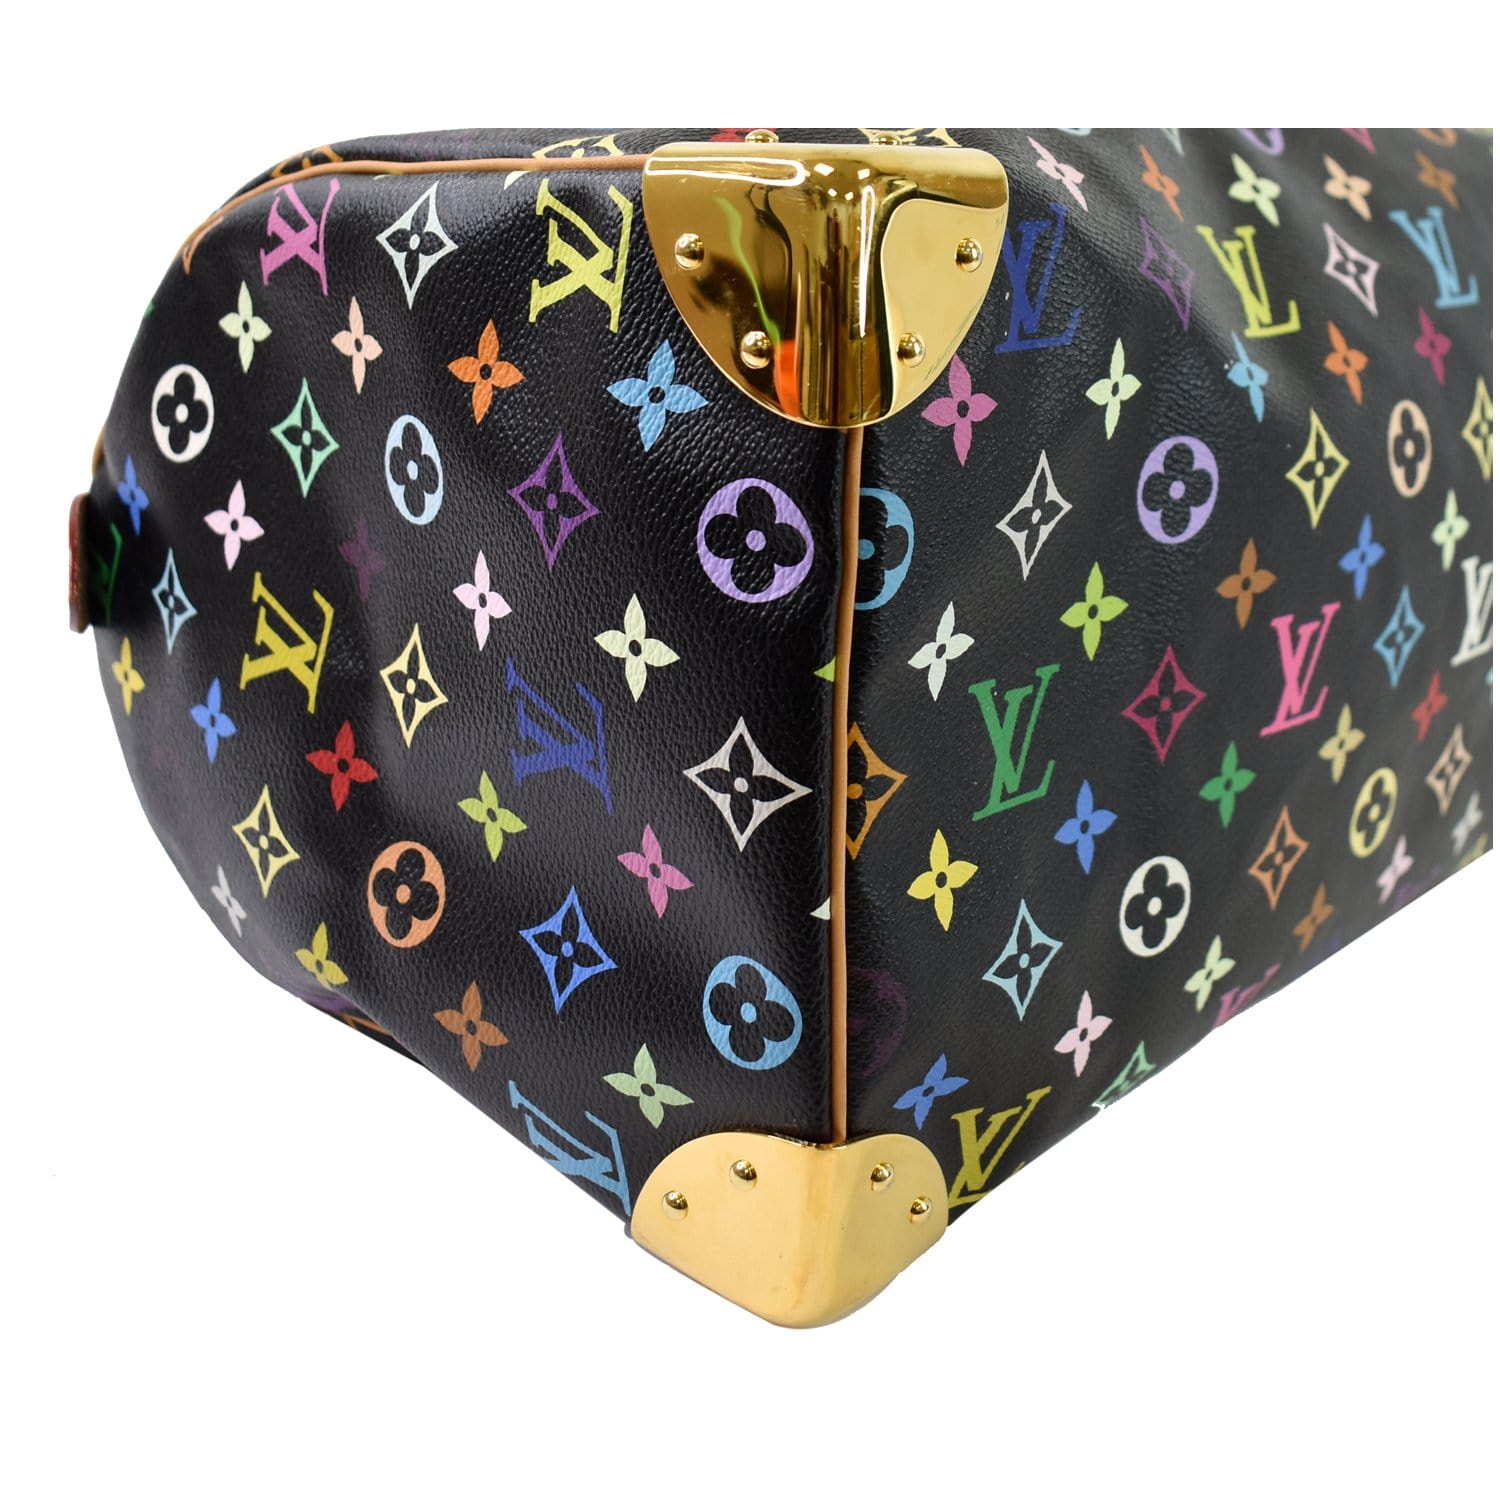 Till this day, my fav bag: Louis Vuitton Multicolor Speedy